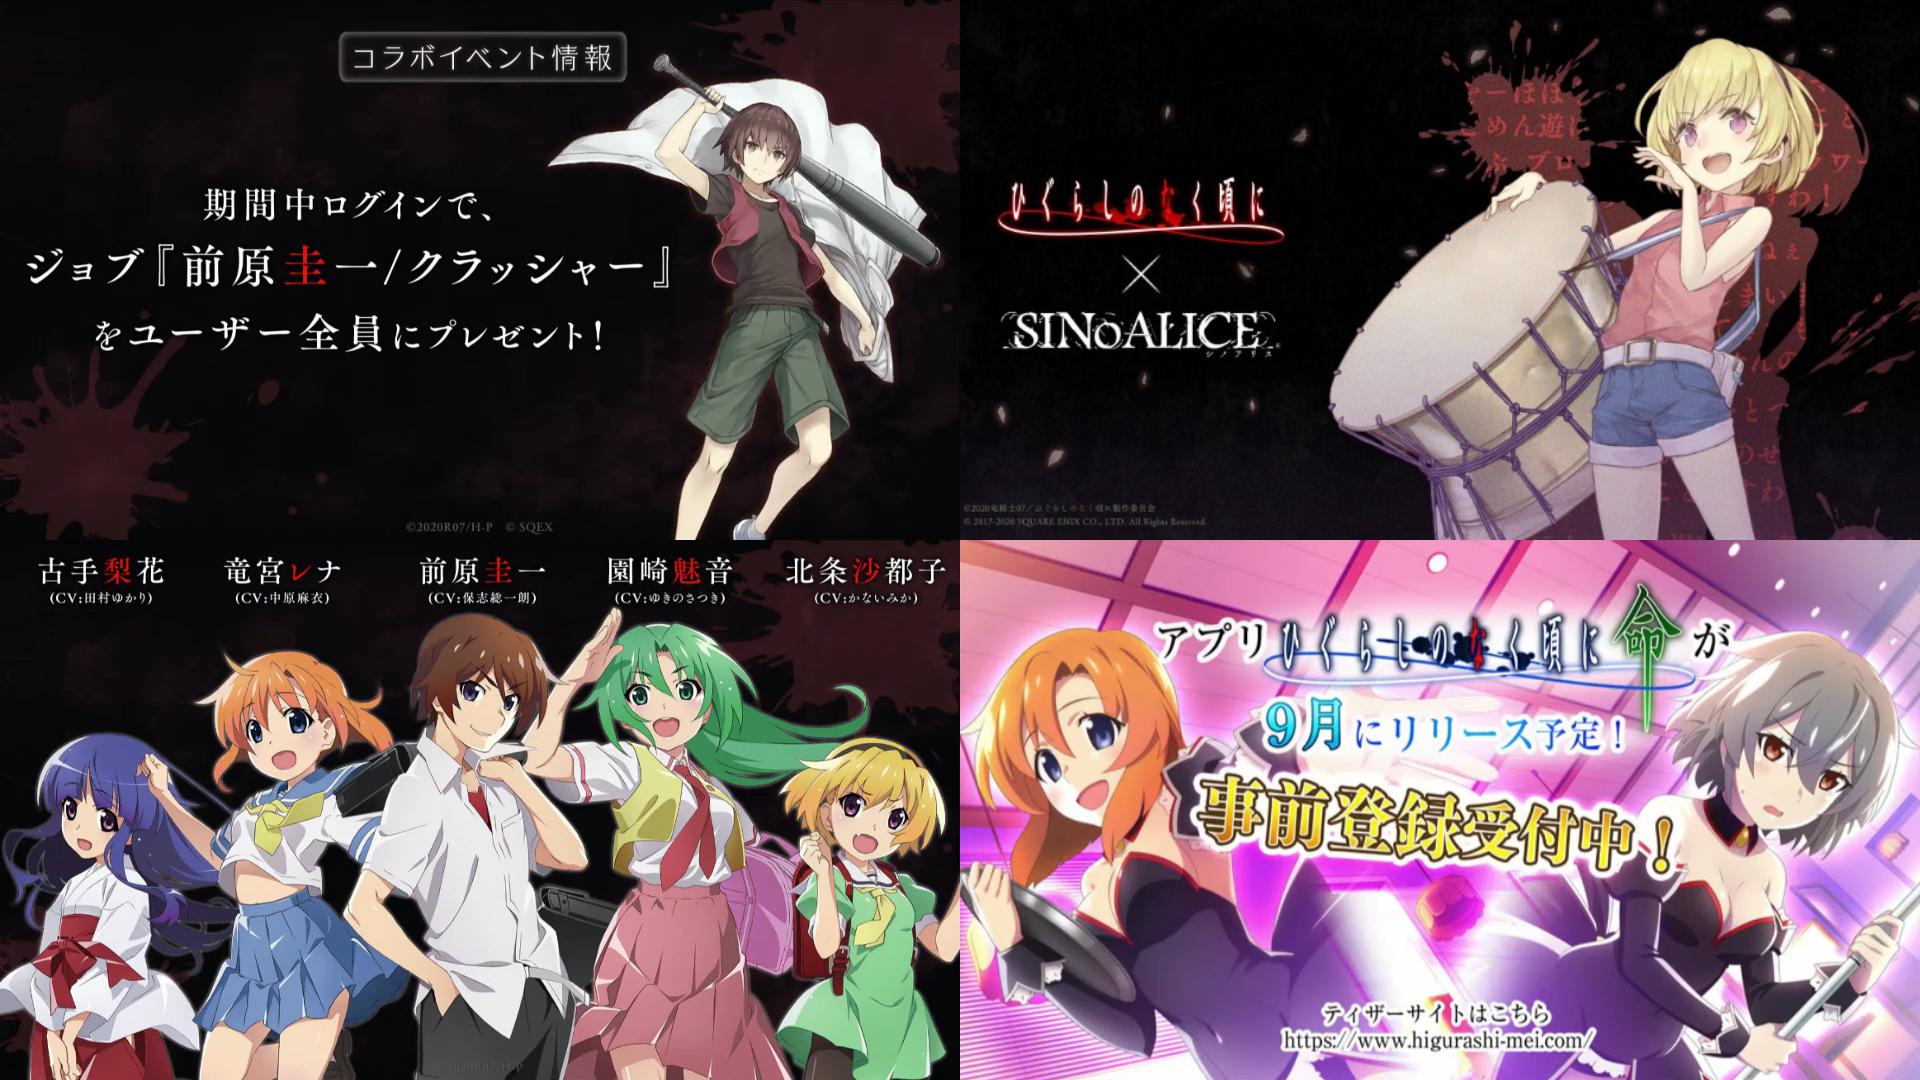 Higurashi Sinoalice Collab Event Includes Hanyuu New Anime Artwork Gamefeed